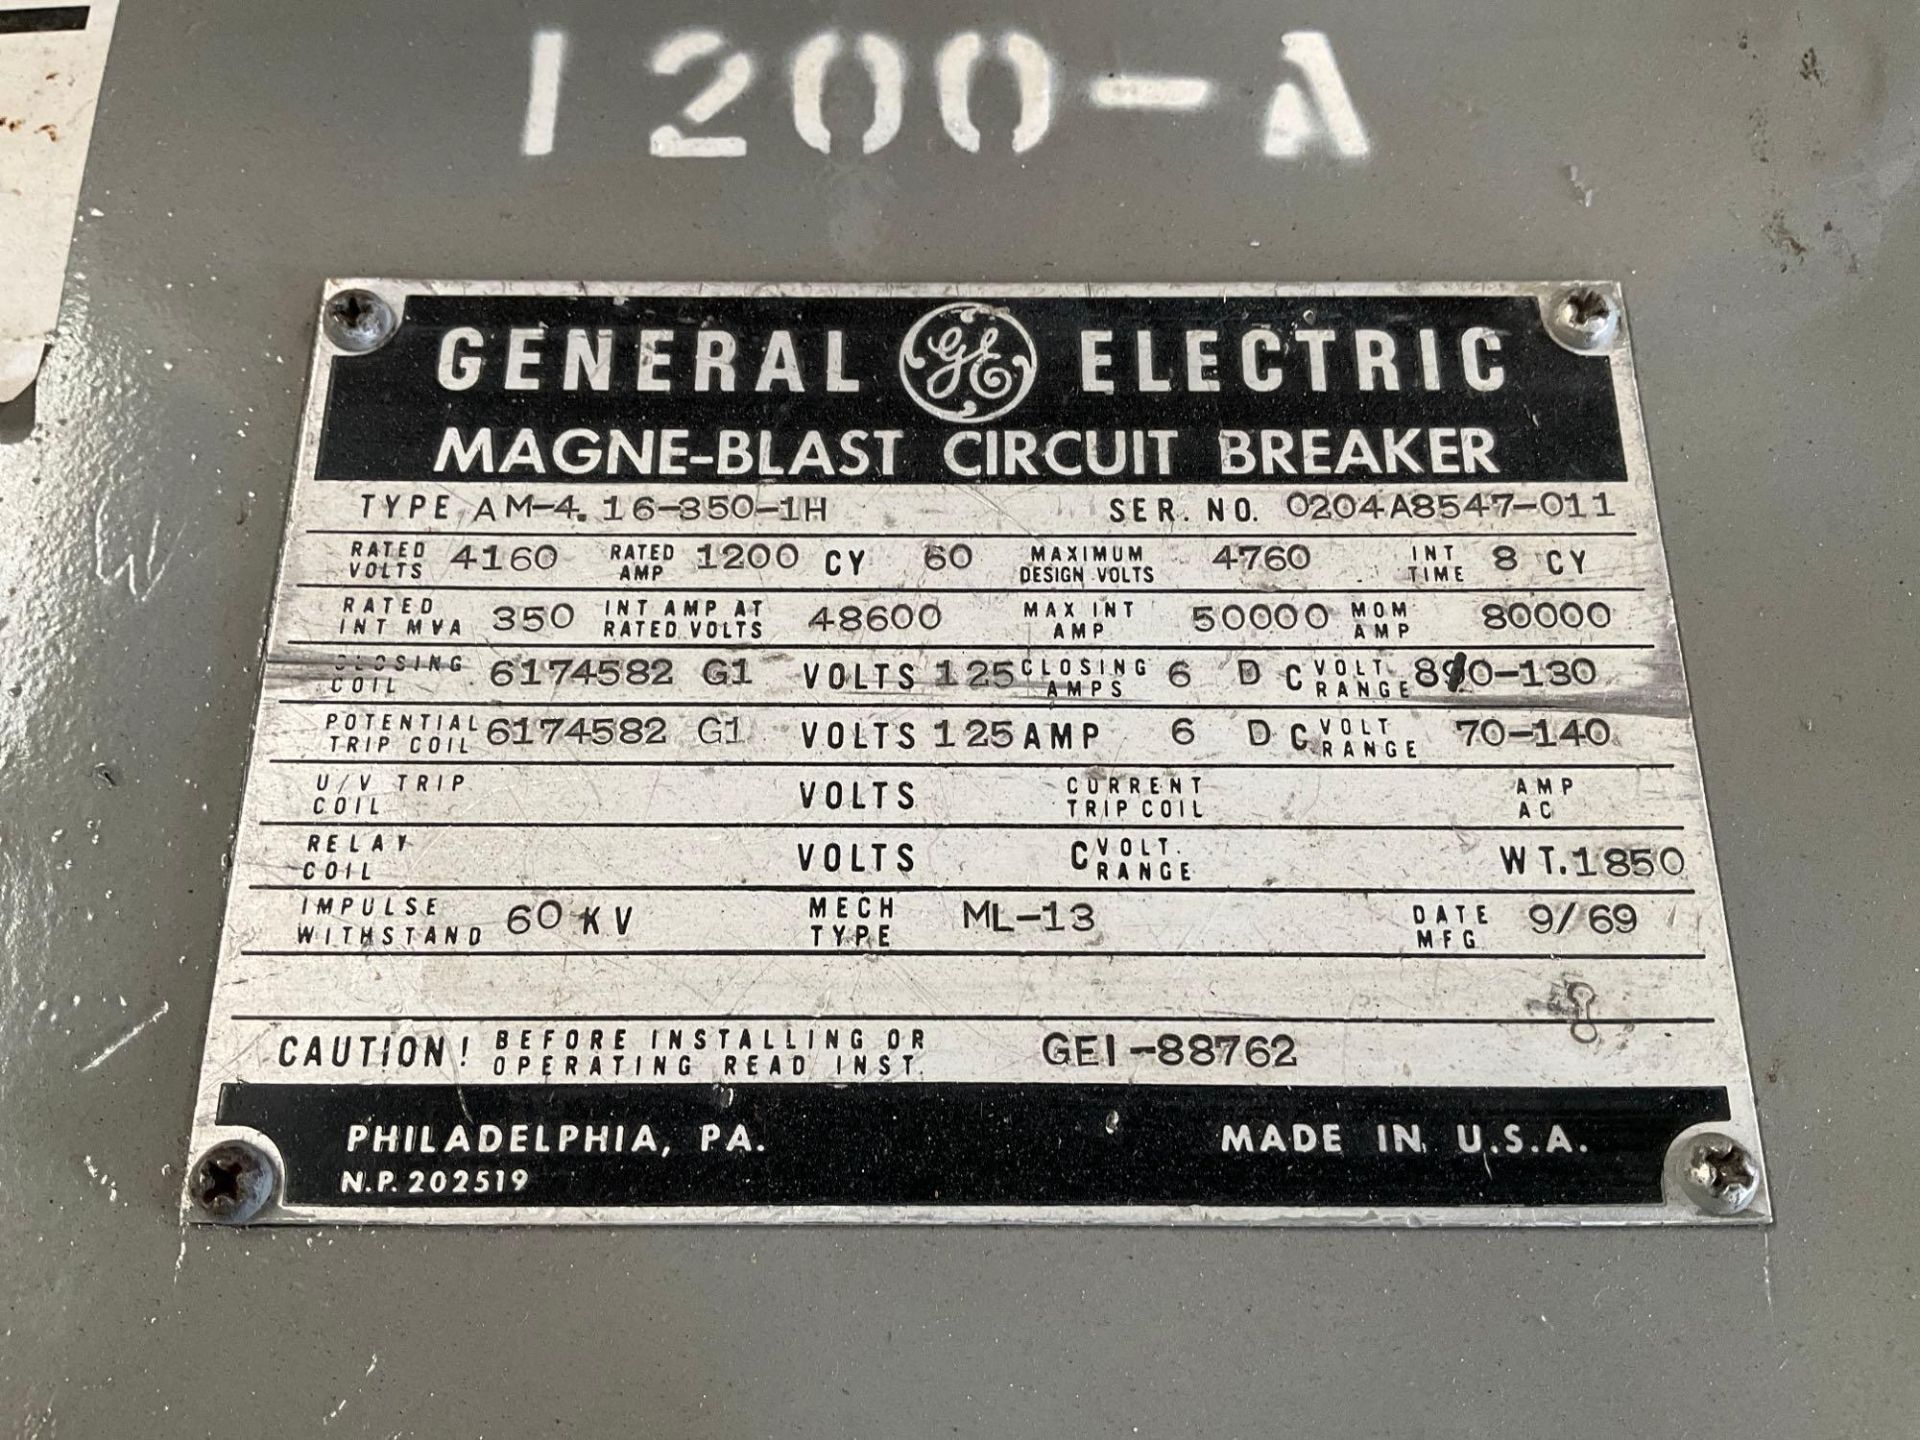 GE - GENERAL ELECTRIC MAGNE-BLAST CIRCUIT BREAKER, TYPE AM-4.16-350-2H, 60HZ, 1200 AMP - Image 8 of 9